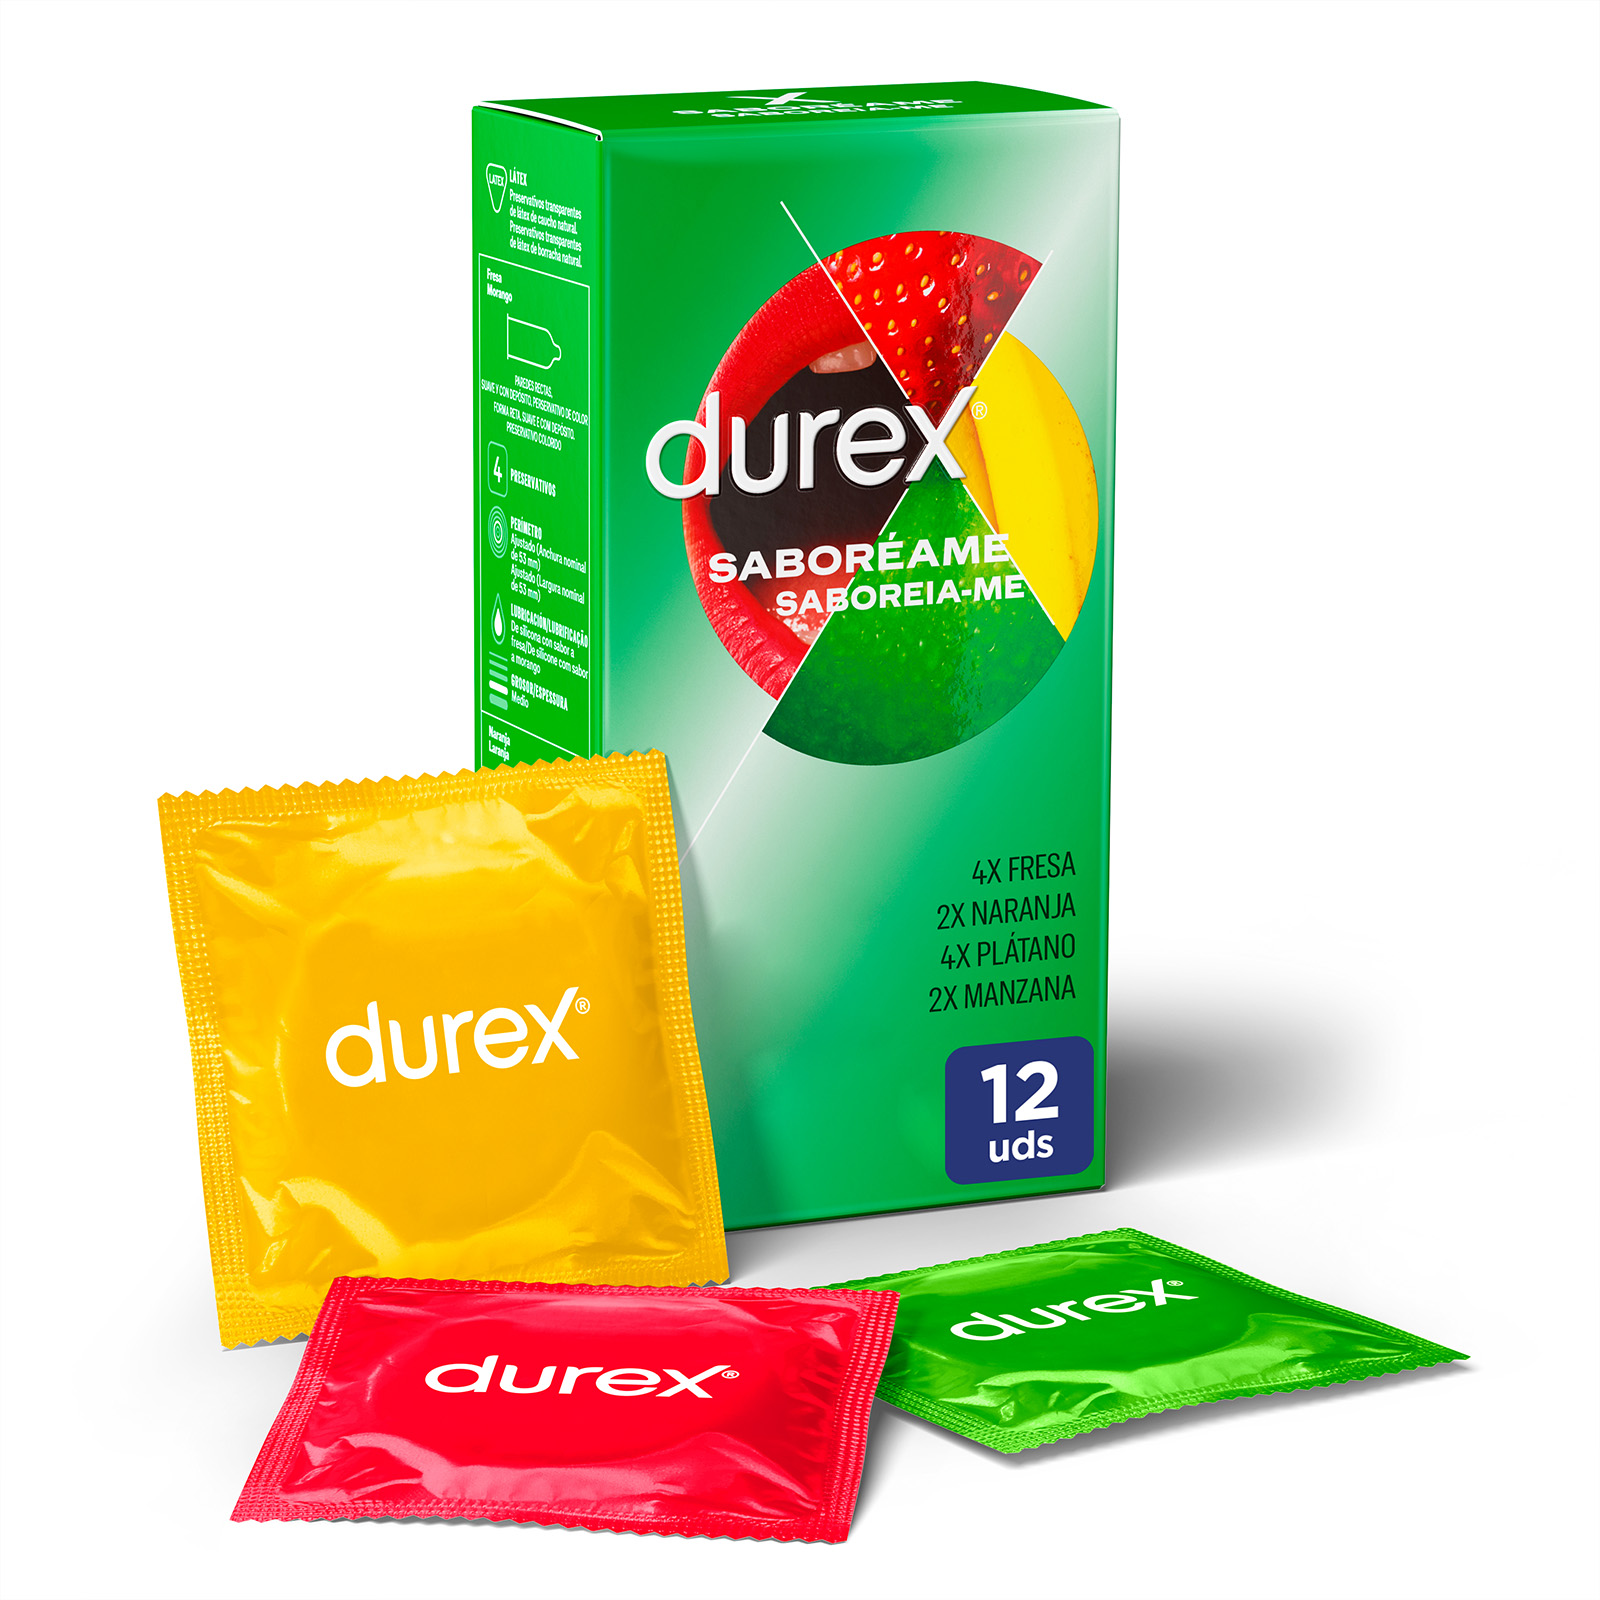 Durex - Durex - Preservativos Saboreame para Mayor Sensación, sabor fresa. naranja. platano, manzana, Packs 12-24 condones para un sexo seguro